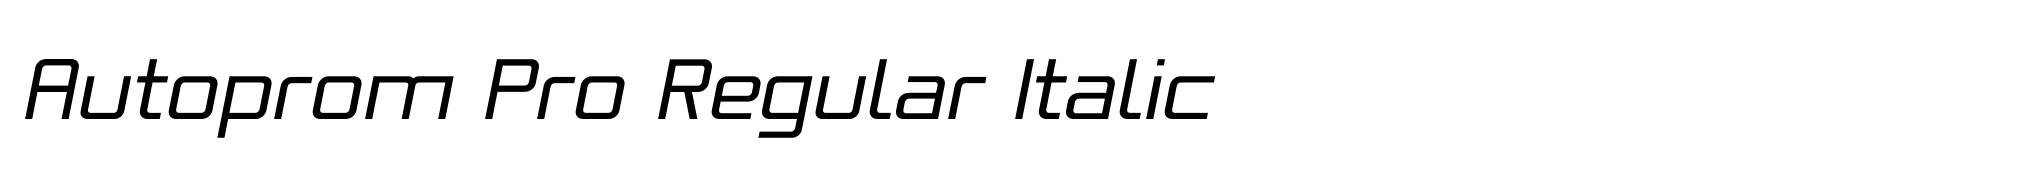 Autoprom Pro Regular Italic image